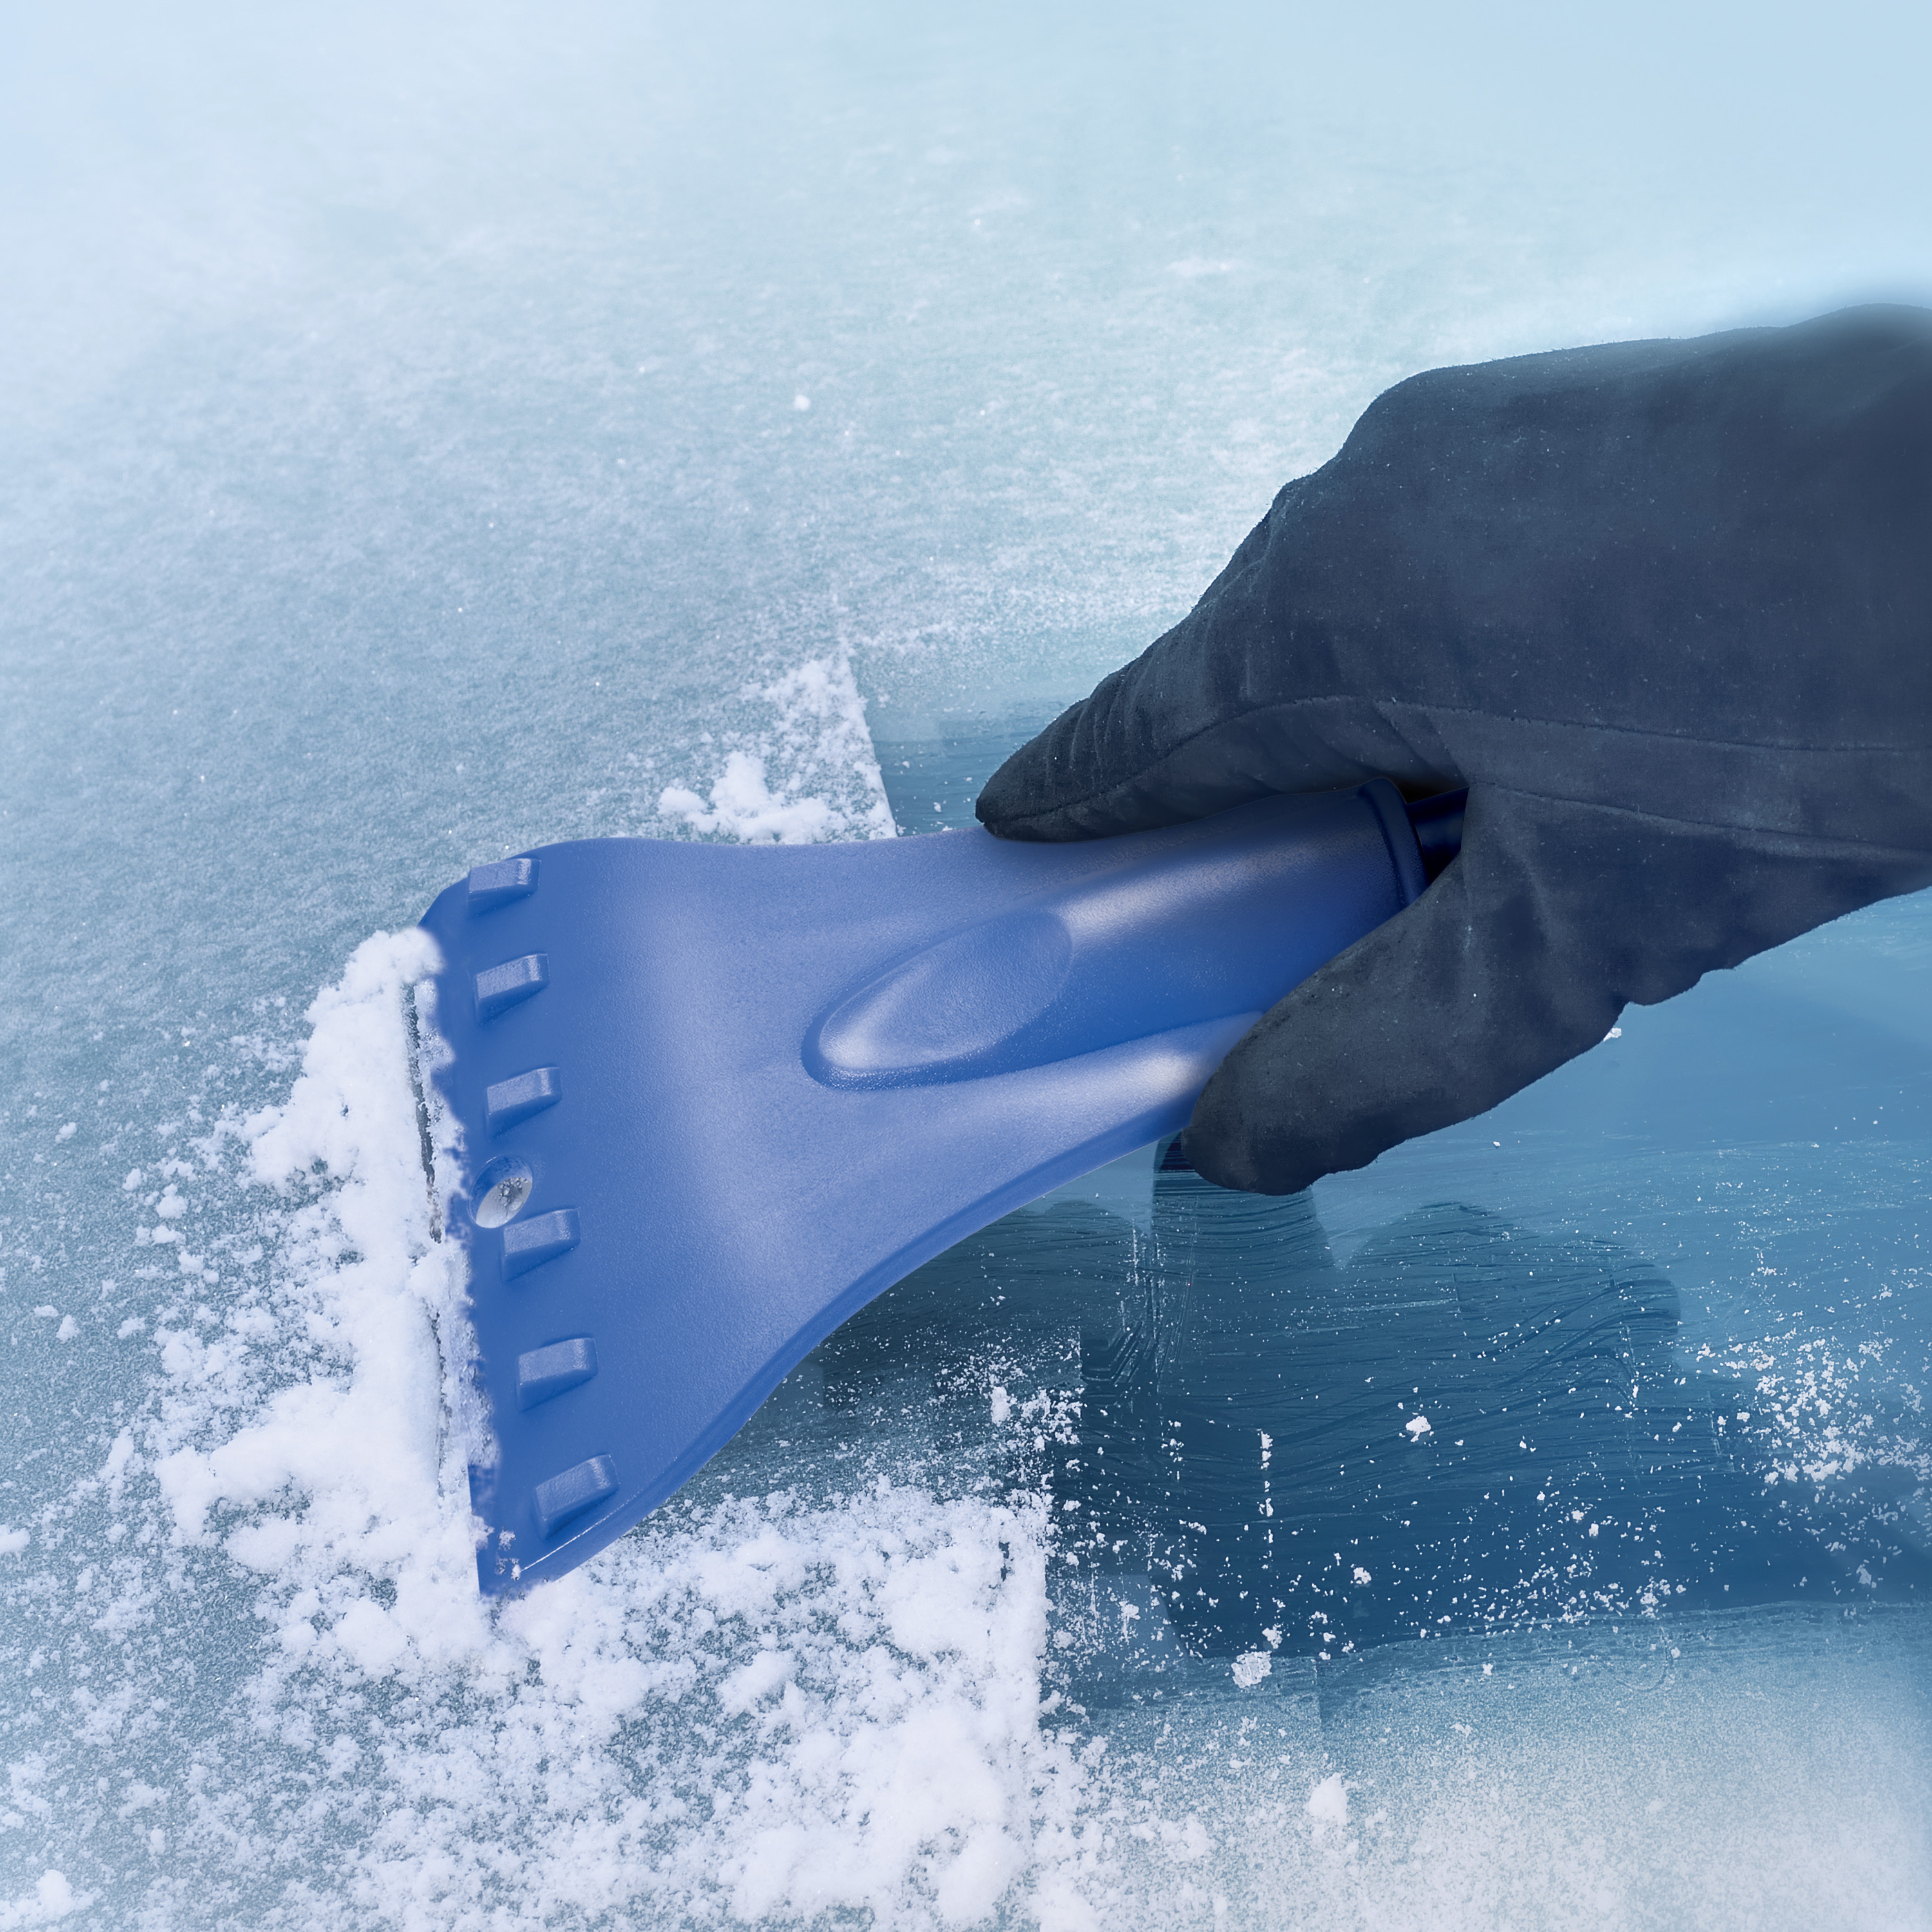 Car Snow Shovel Heavy Duty Snow Remover Car Window Scraper For